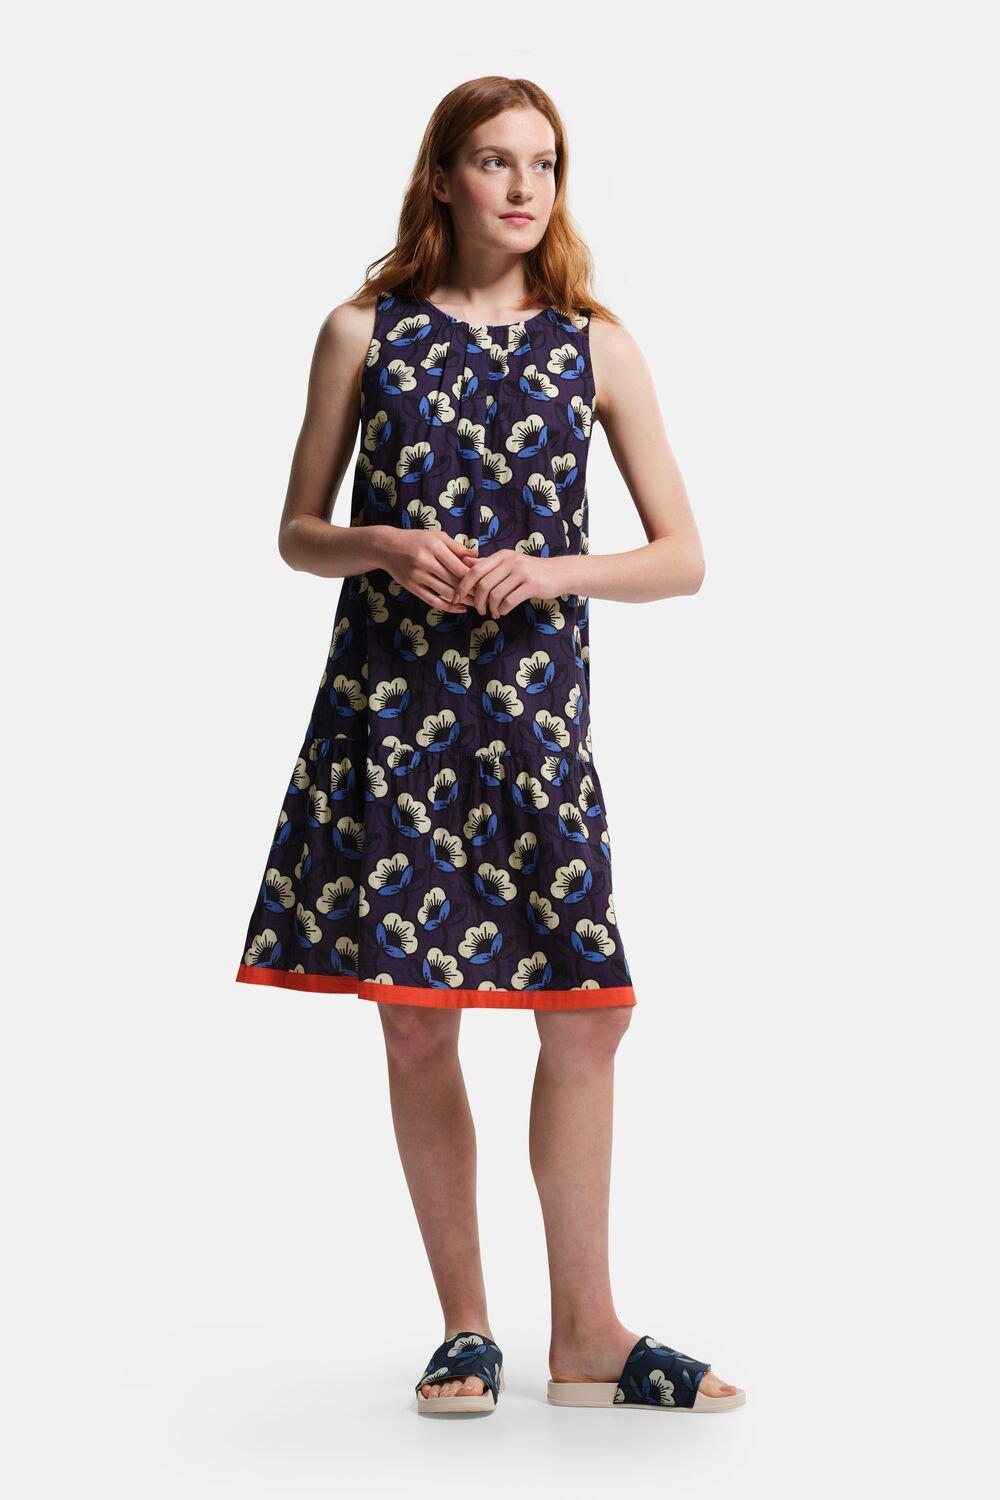 'Orla Kiely' A-Line Sleeveless Summer Dress